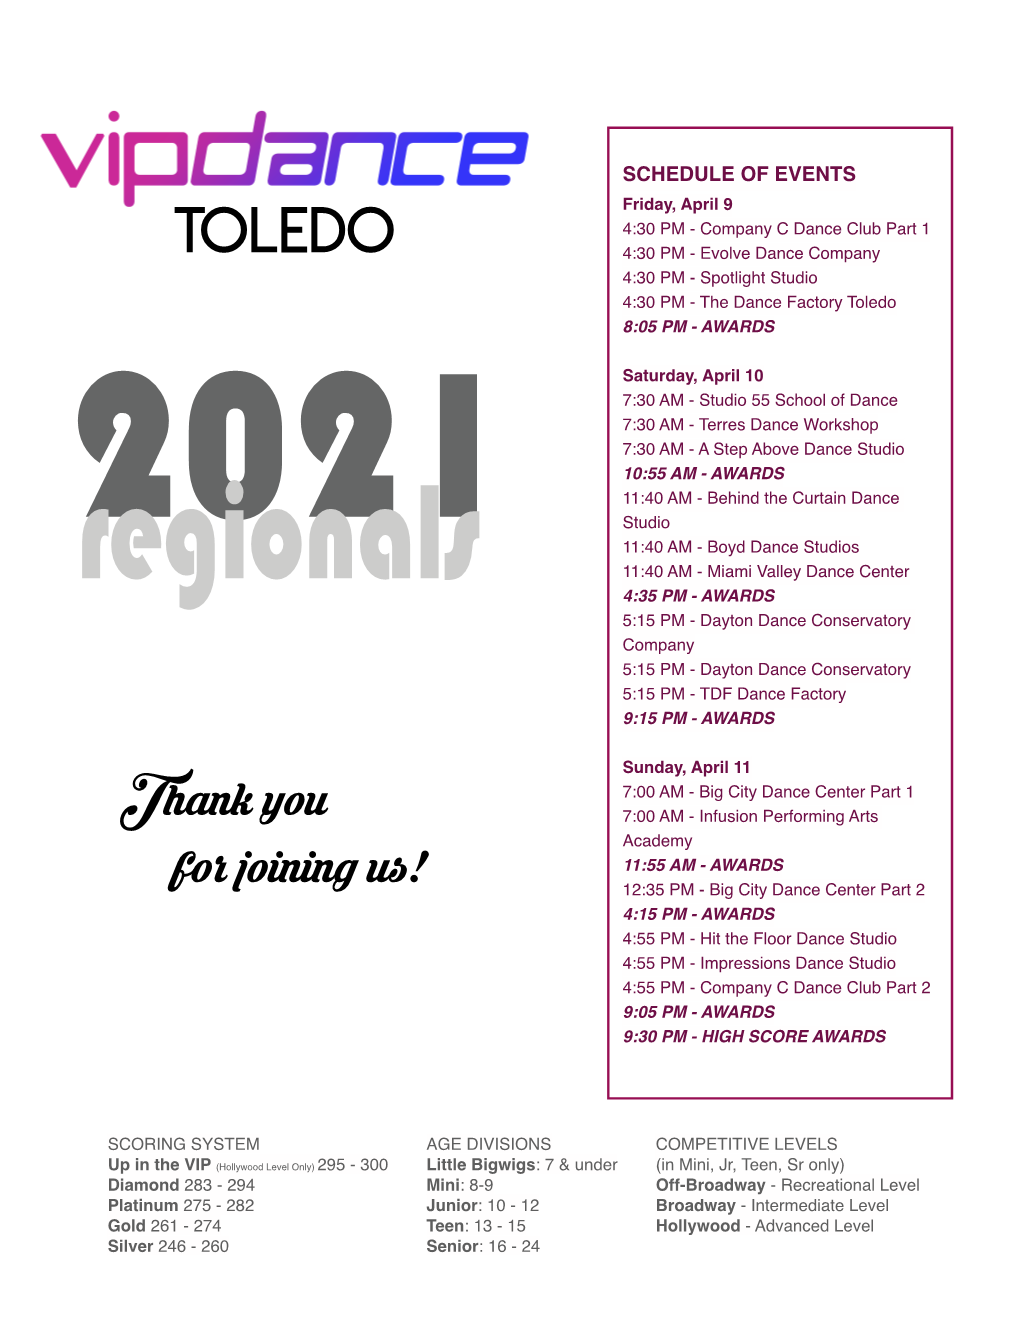 TOLEDO 4:30 PM - Evolve Dance Company 4:30 PM - Spotlight Studio 4:30 PM - the Dance Factory Toledo 8:05 PM - AWARDS